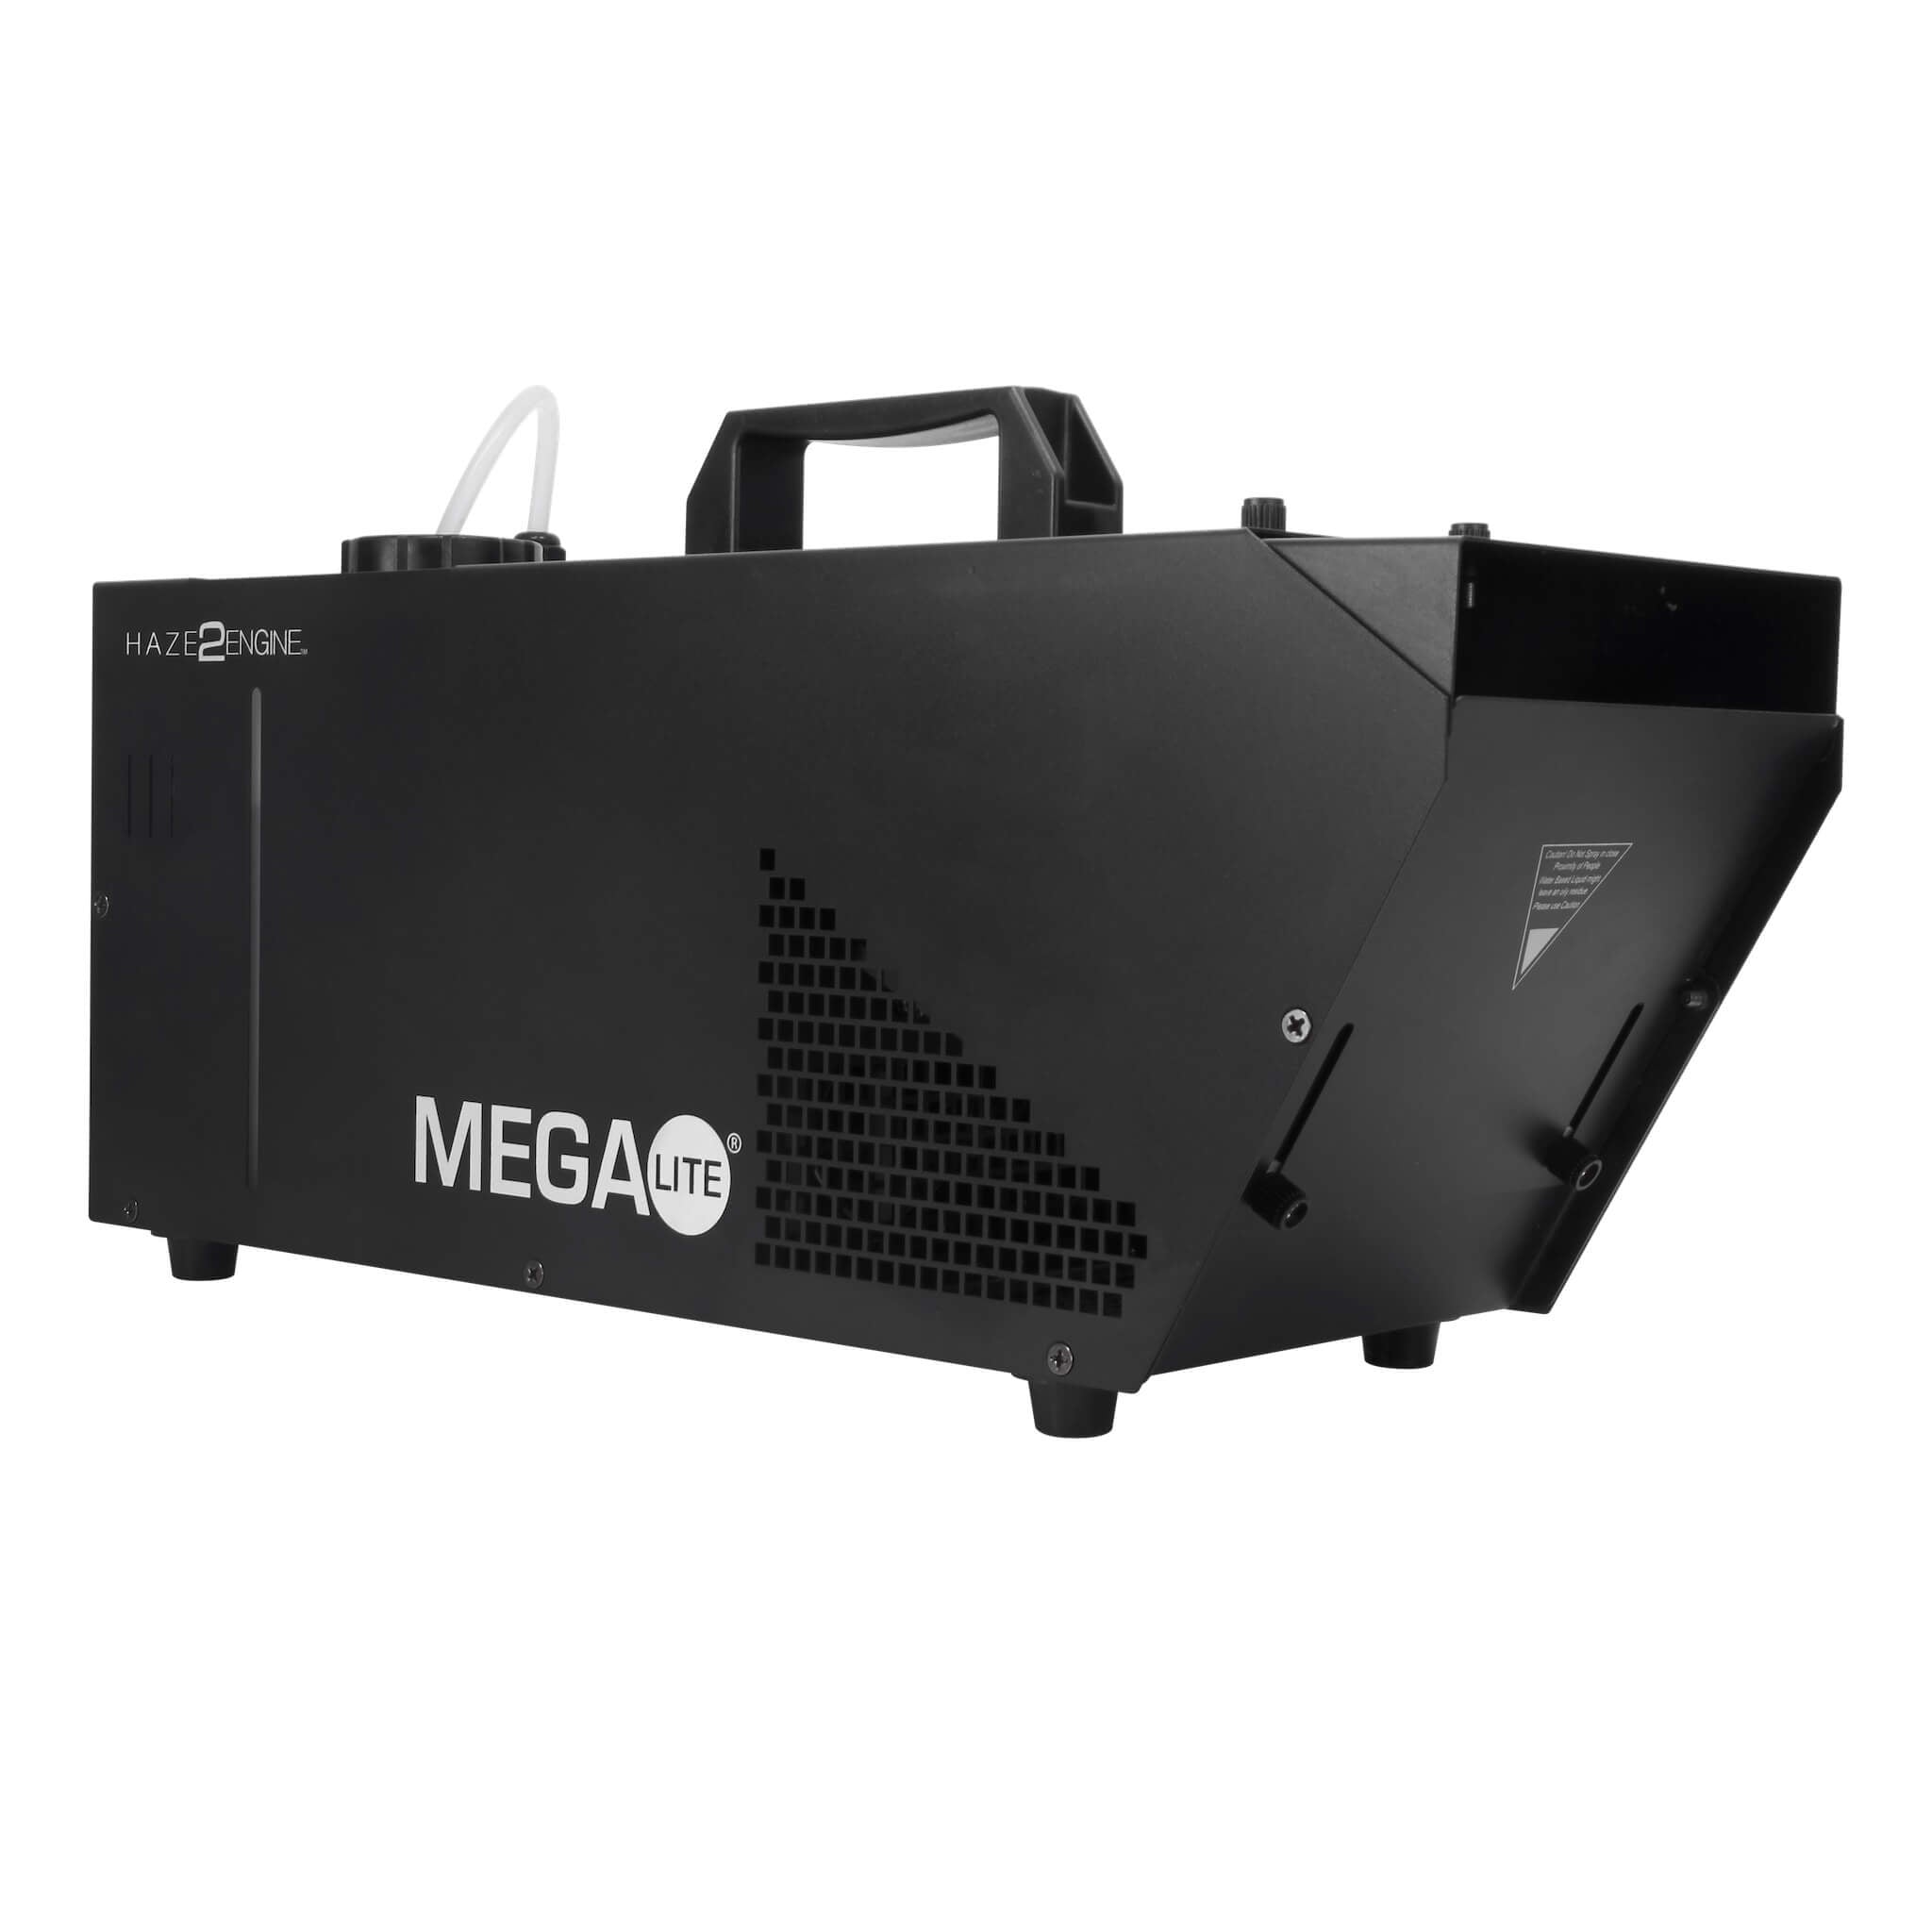 Mega-Lite Haze 2 Engine - 900W Water Based Hazer, angle left